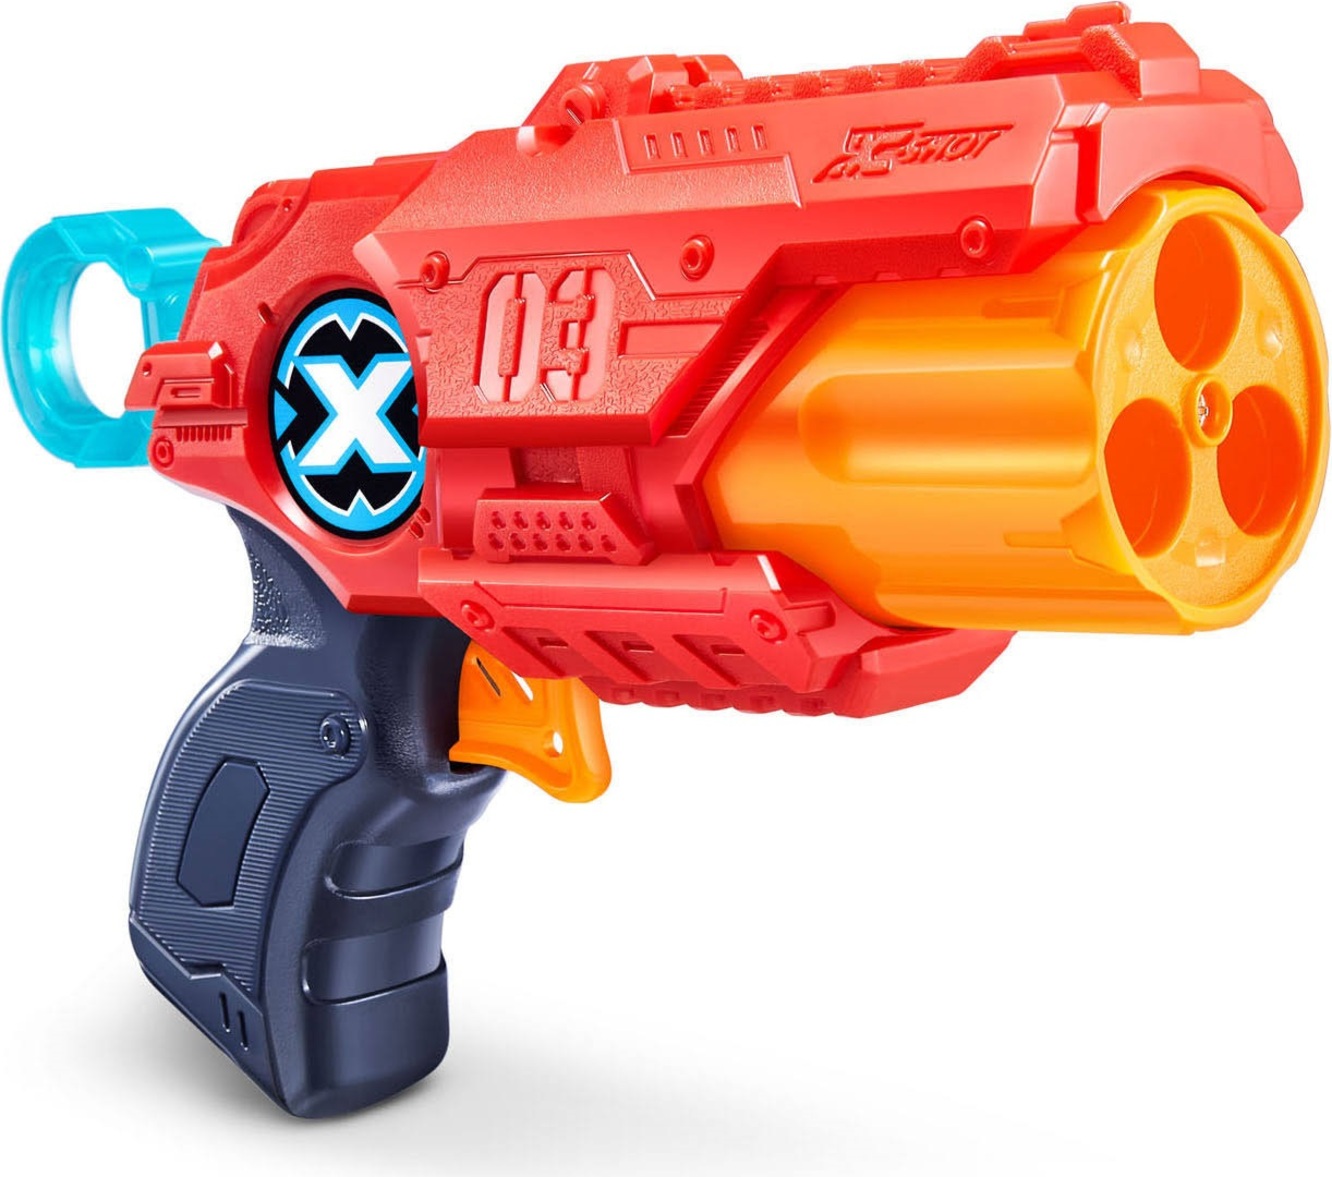 X-SHOT EXCEL MK 3 s otočnou hlavní a 8 náboji